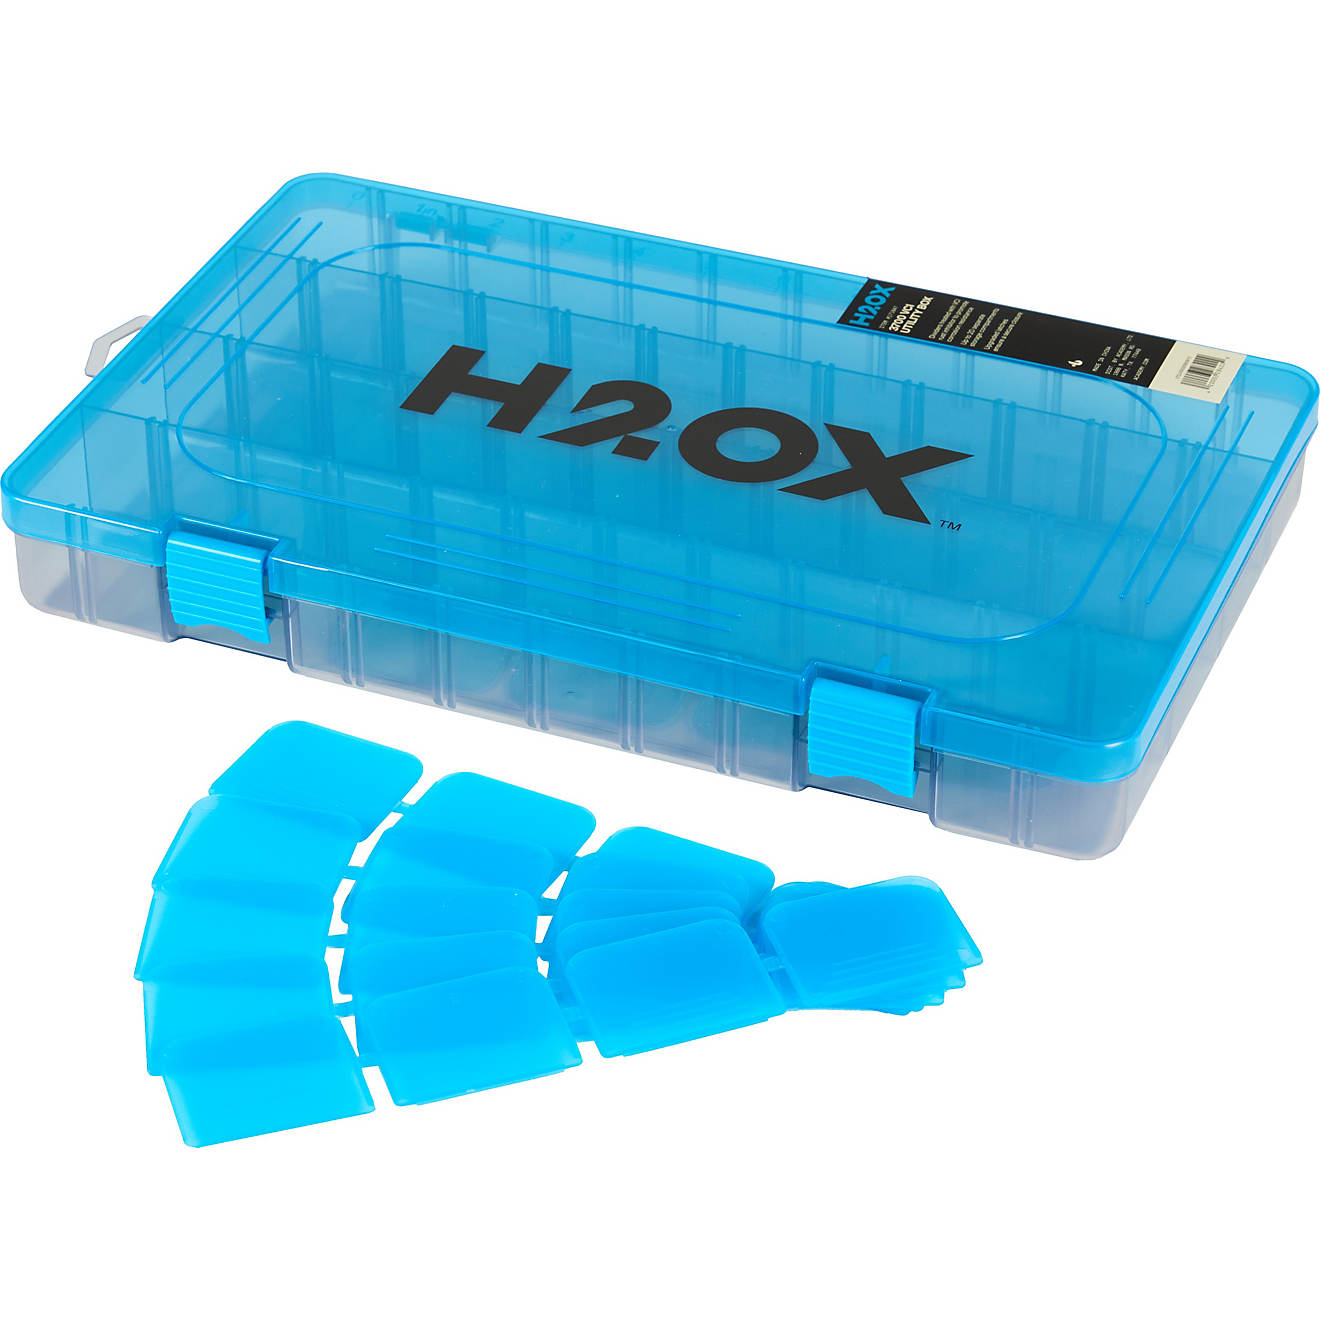 H2OX 3700 Premium Utility Box W/ VCI Inhibitor